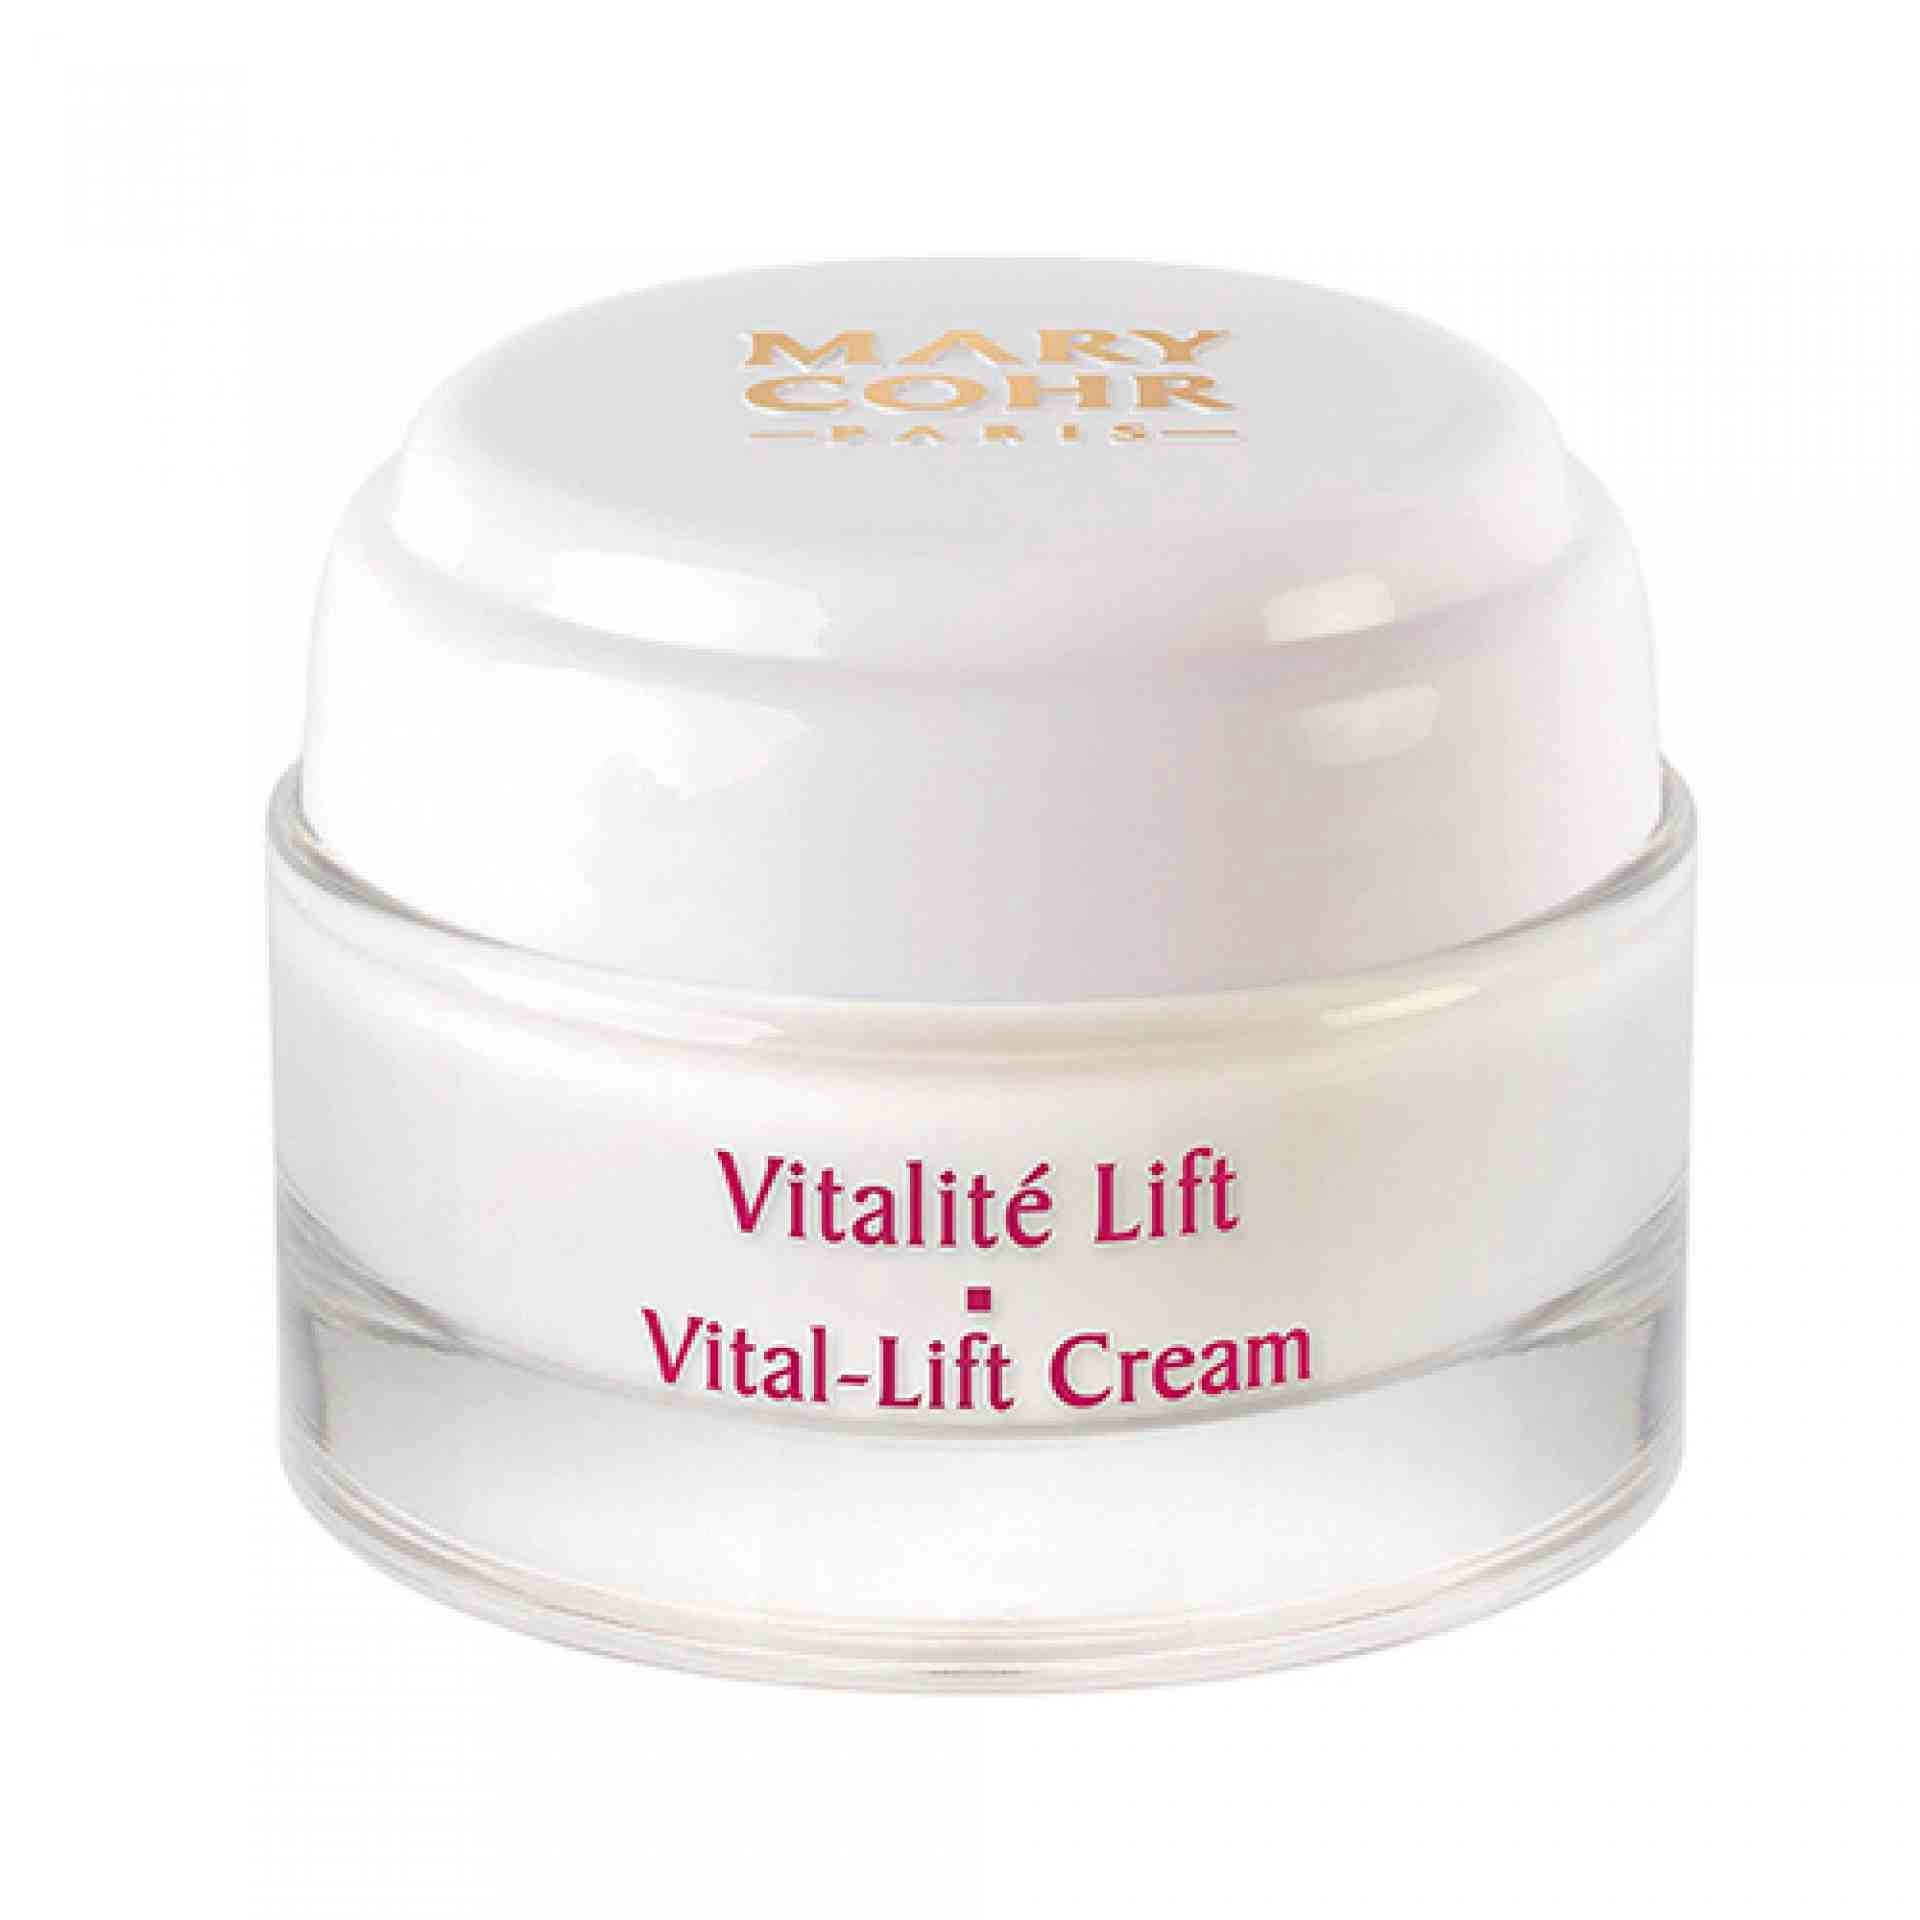 Vitalité Lift | Crema Nutritiva y Reafirmante 50ml - Mary Cohr ®